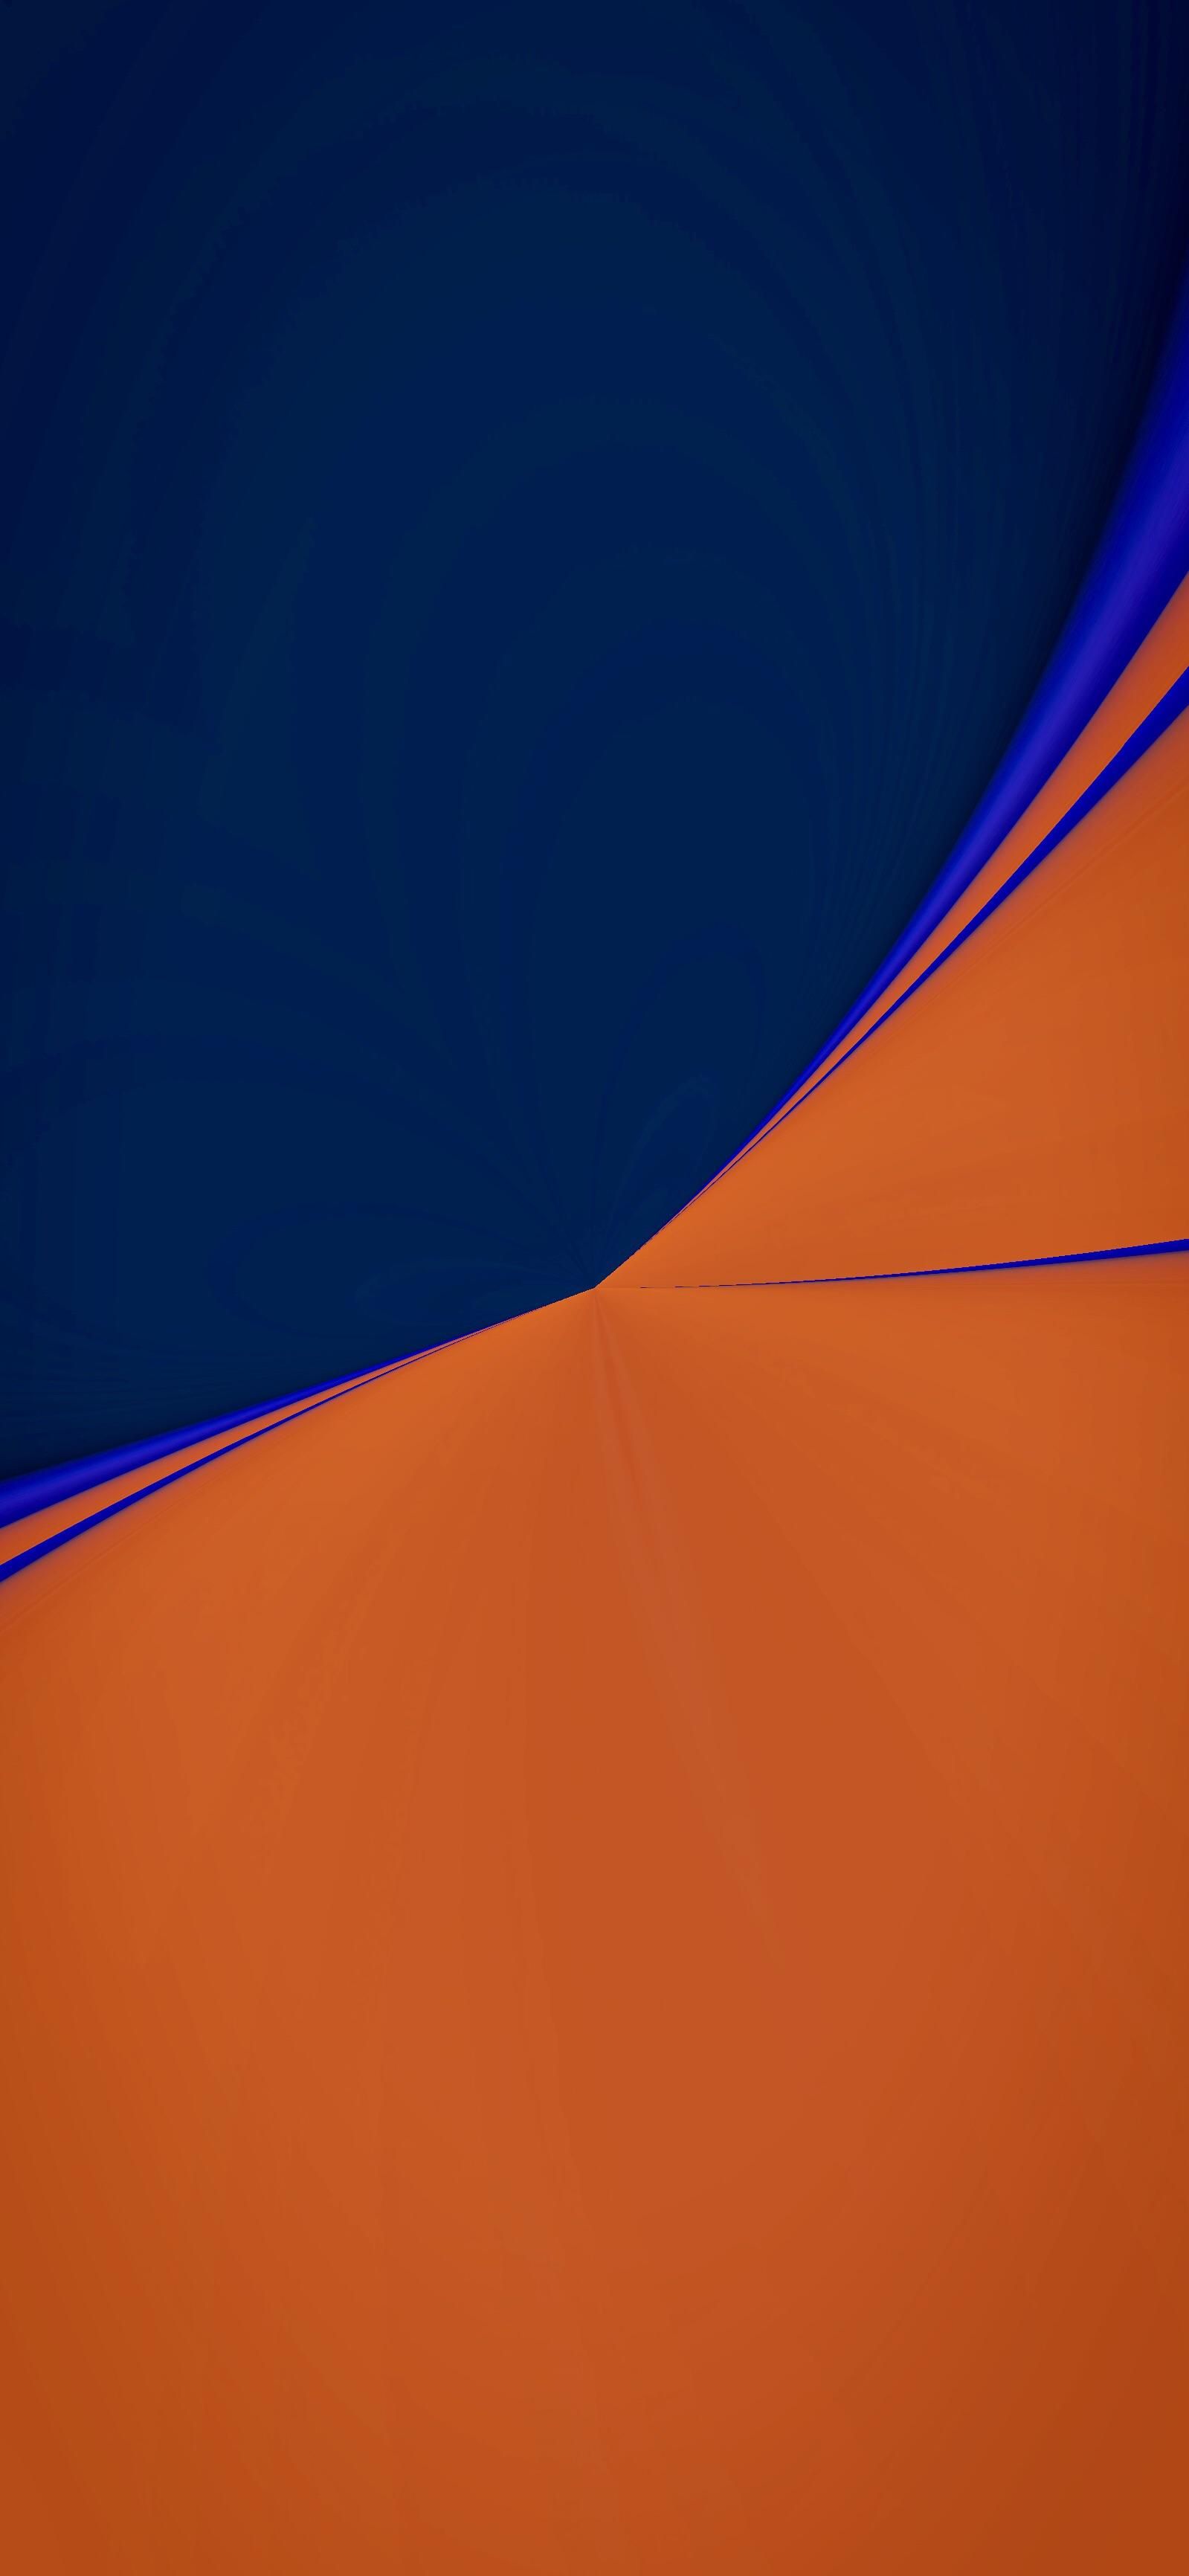 Blue orange color wallpaper iphone blue background plain orange wallpaper